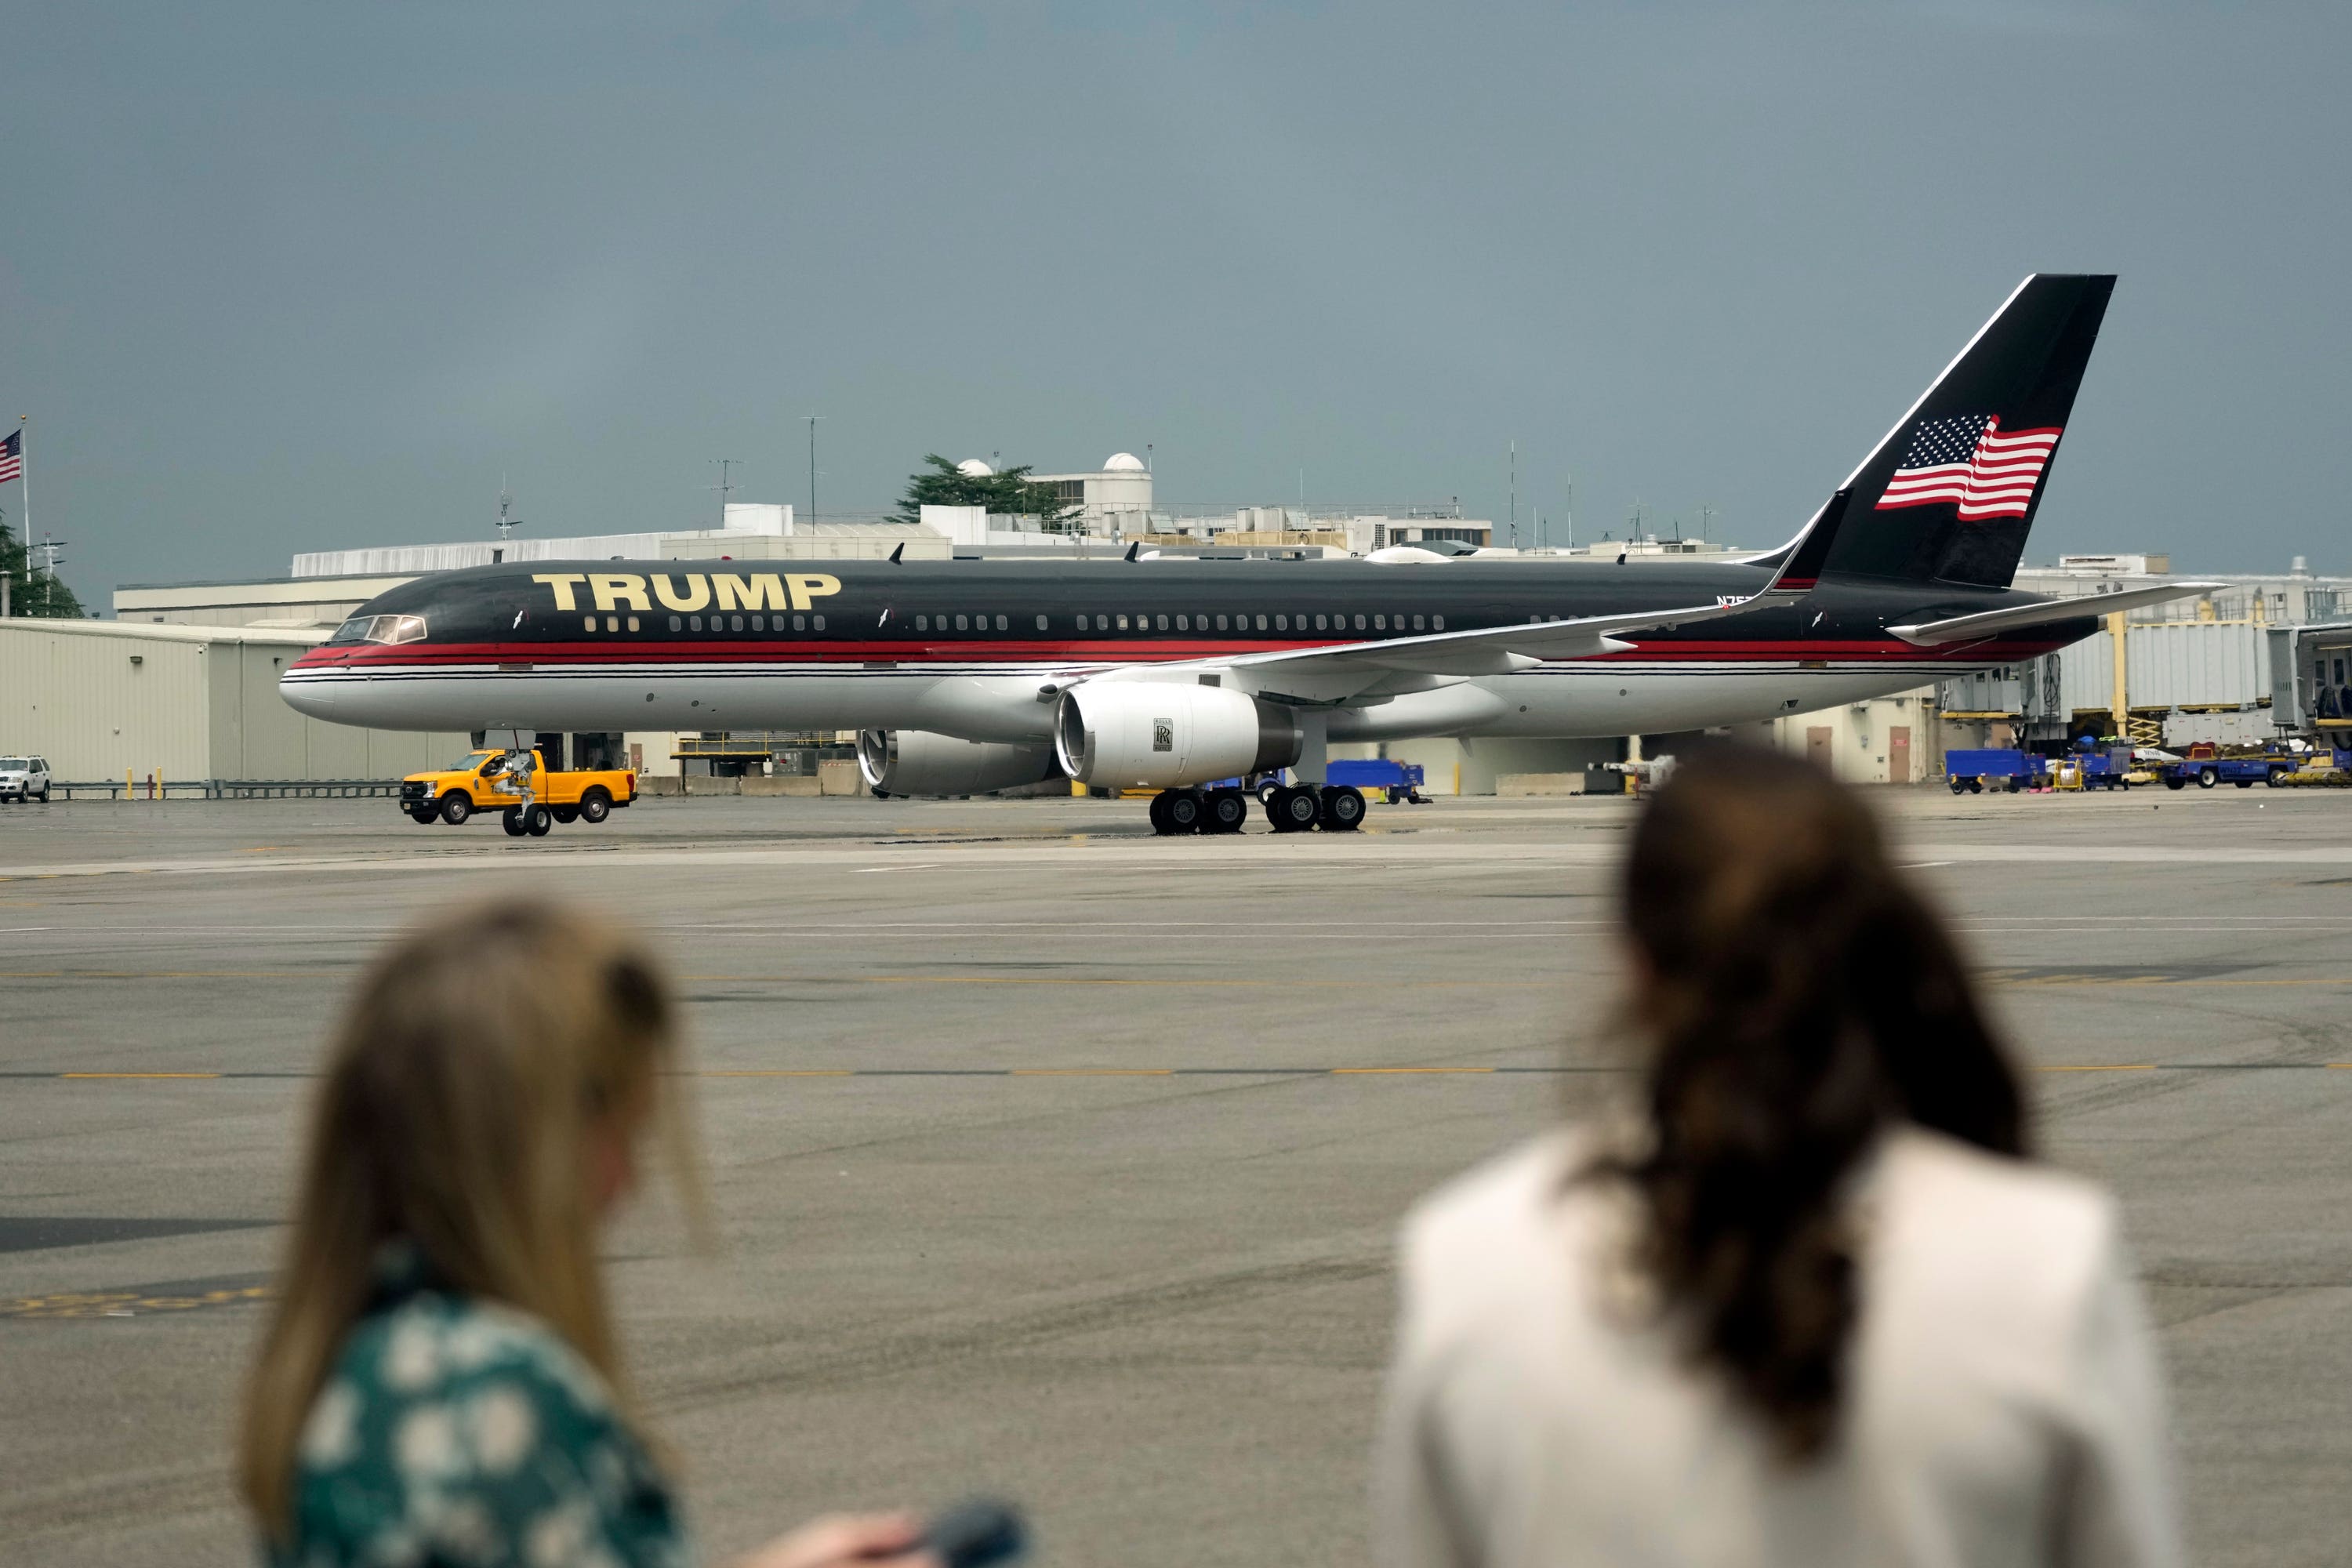 Donald Trump’s plane arriving in Washington.